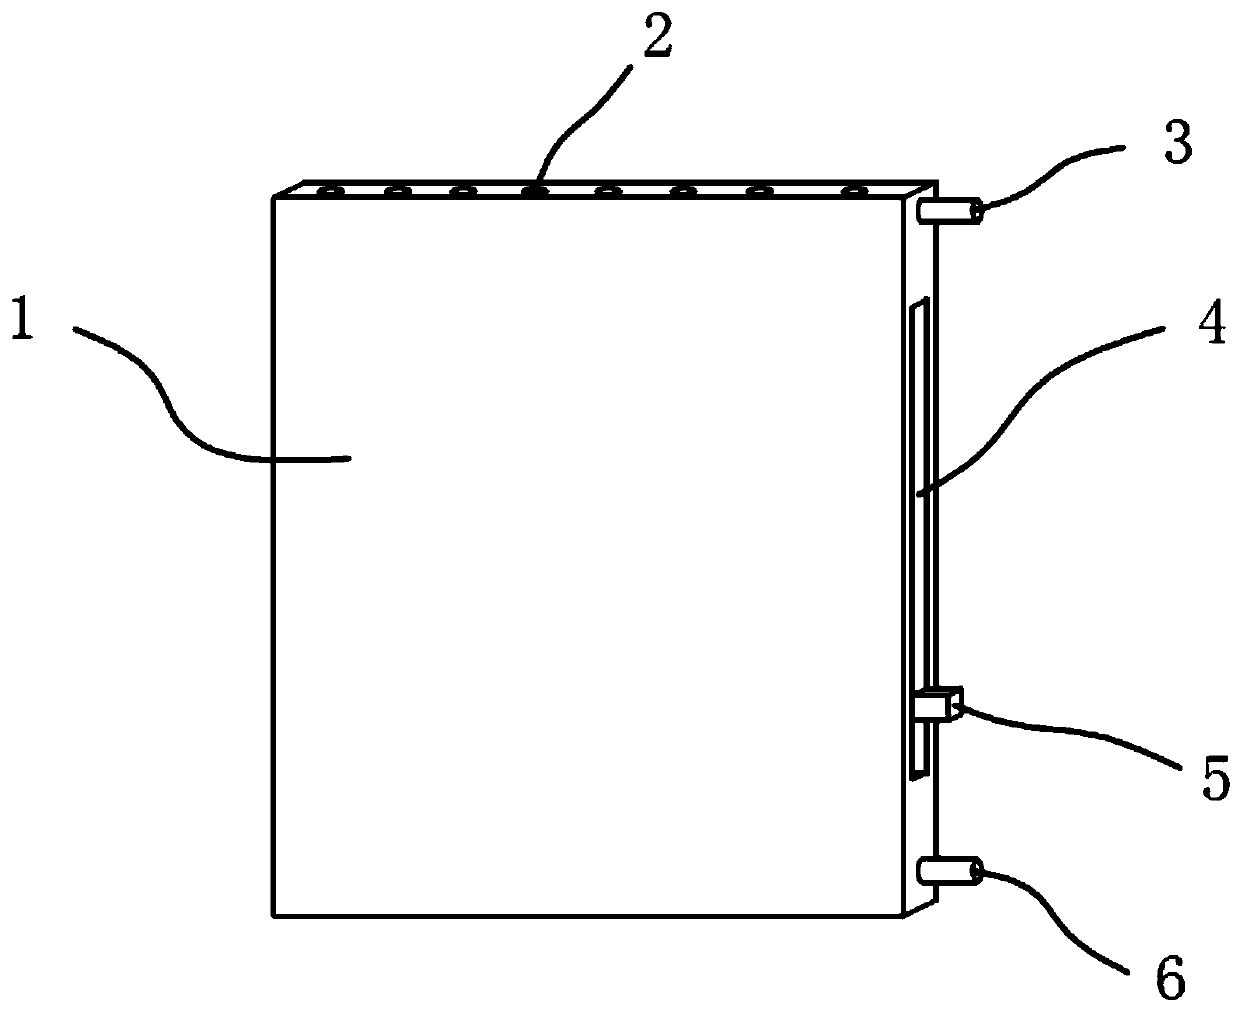 Temperature-controlled optical grating film